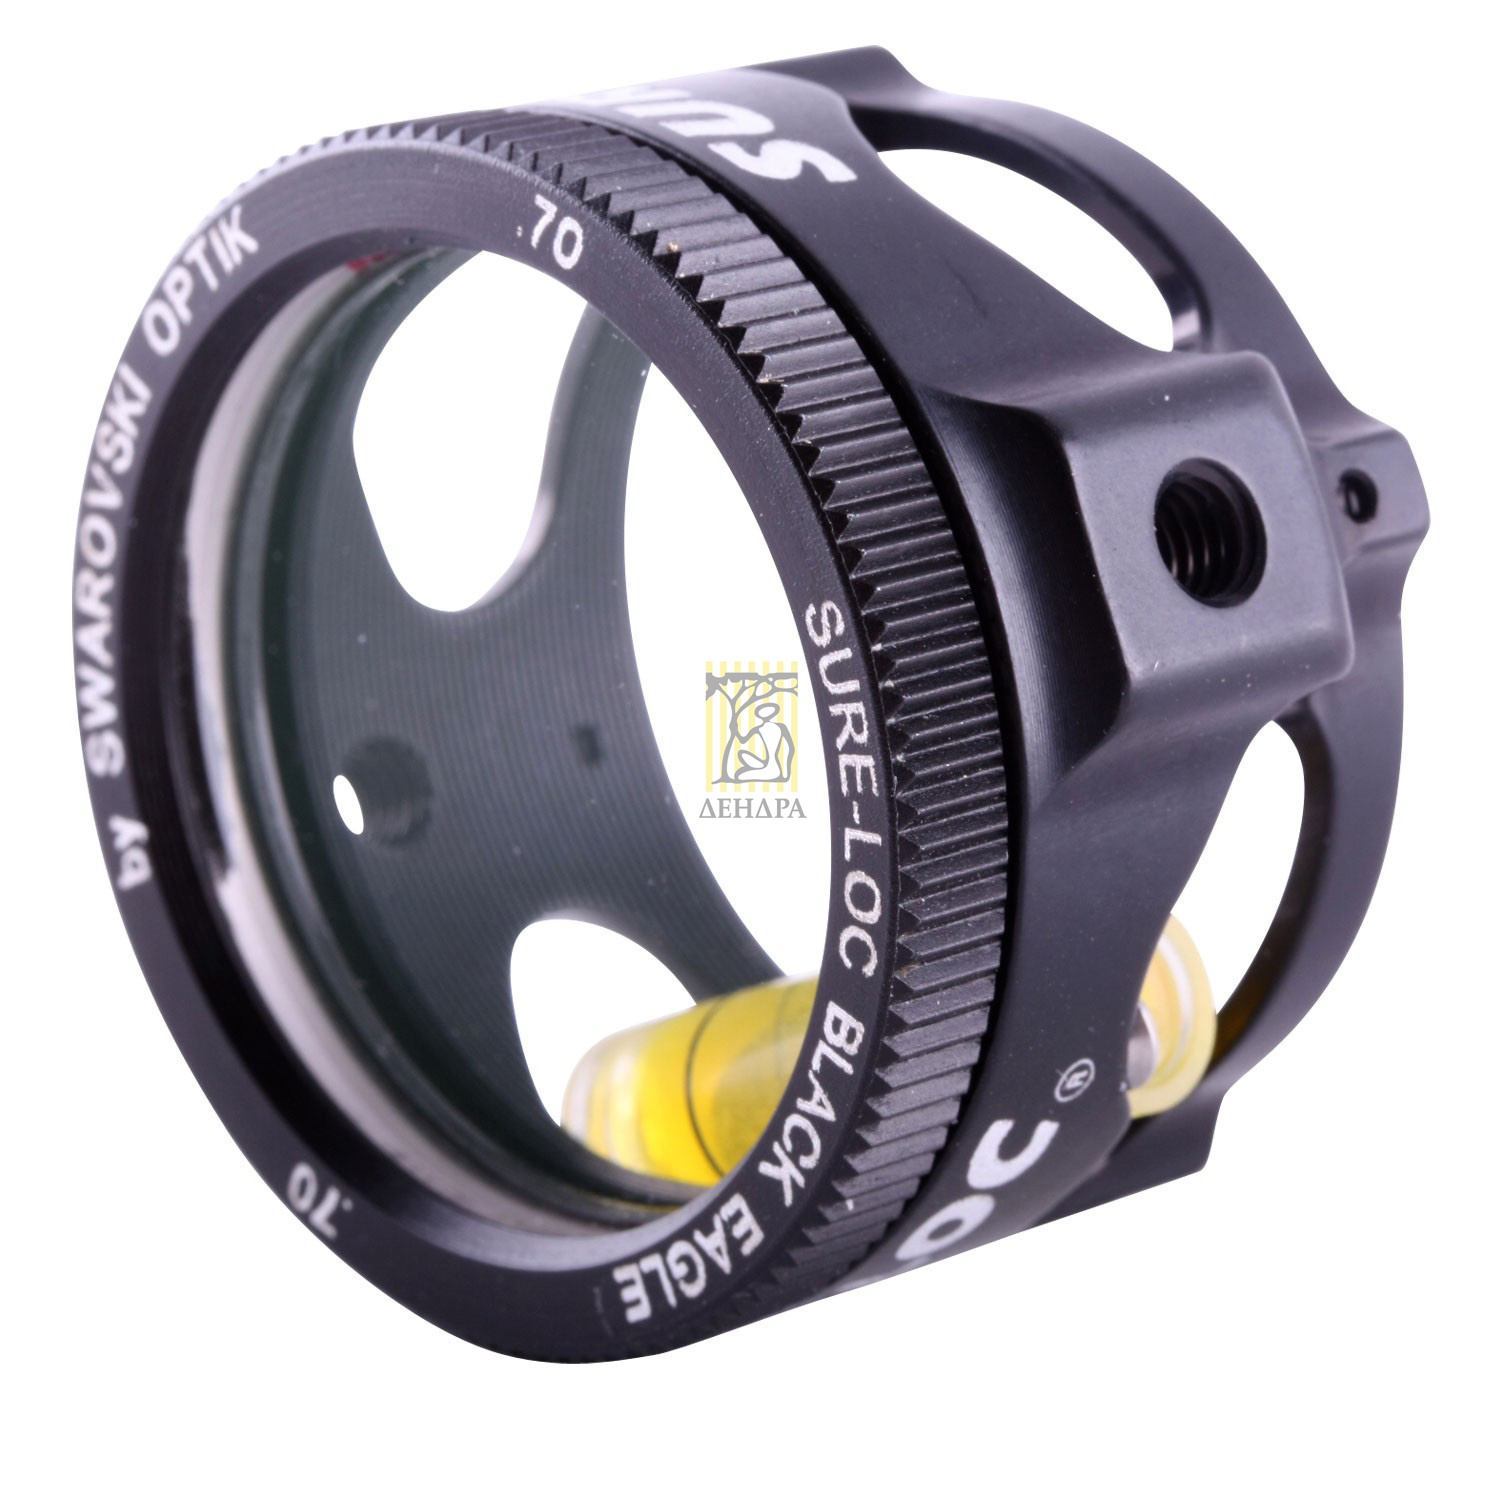 Линза Swarovski Optik® для скопа Black Eagle, диаметр 35mm, размер 0.50, увеличение 4 крата+, цвет ч